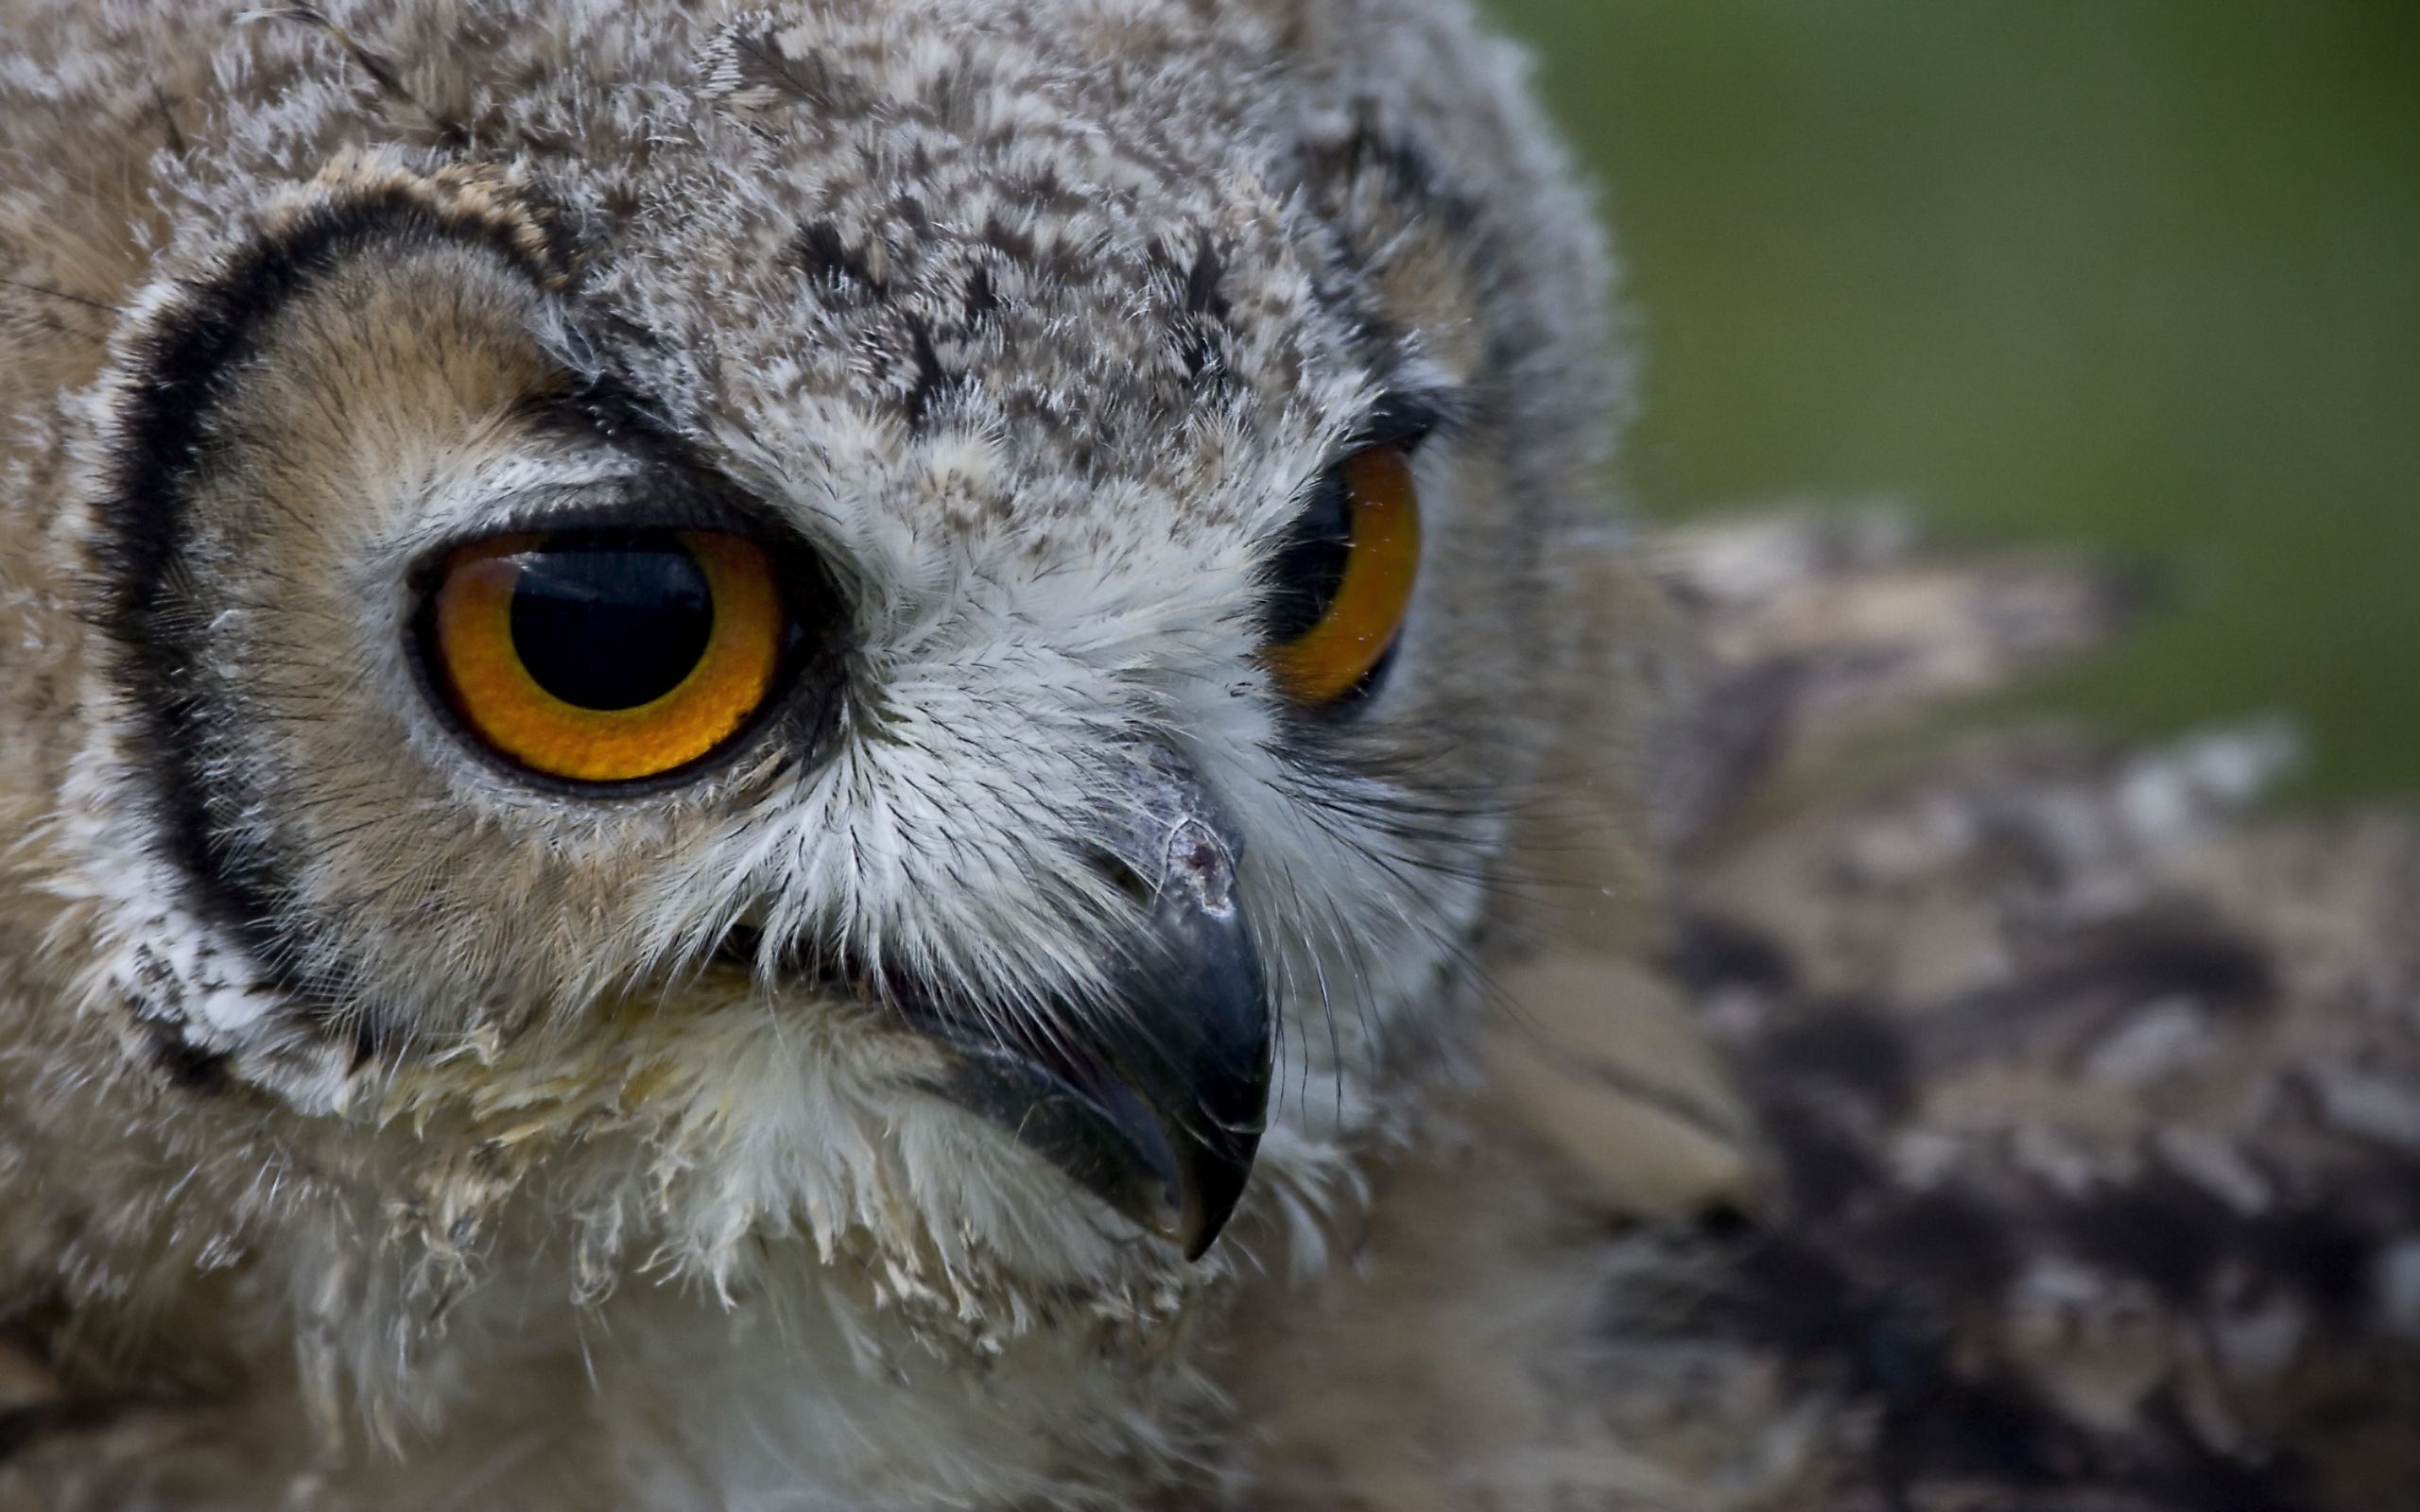 The face of an owl